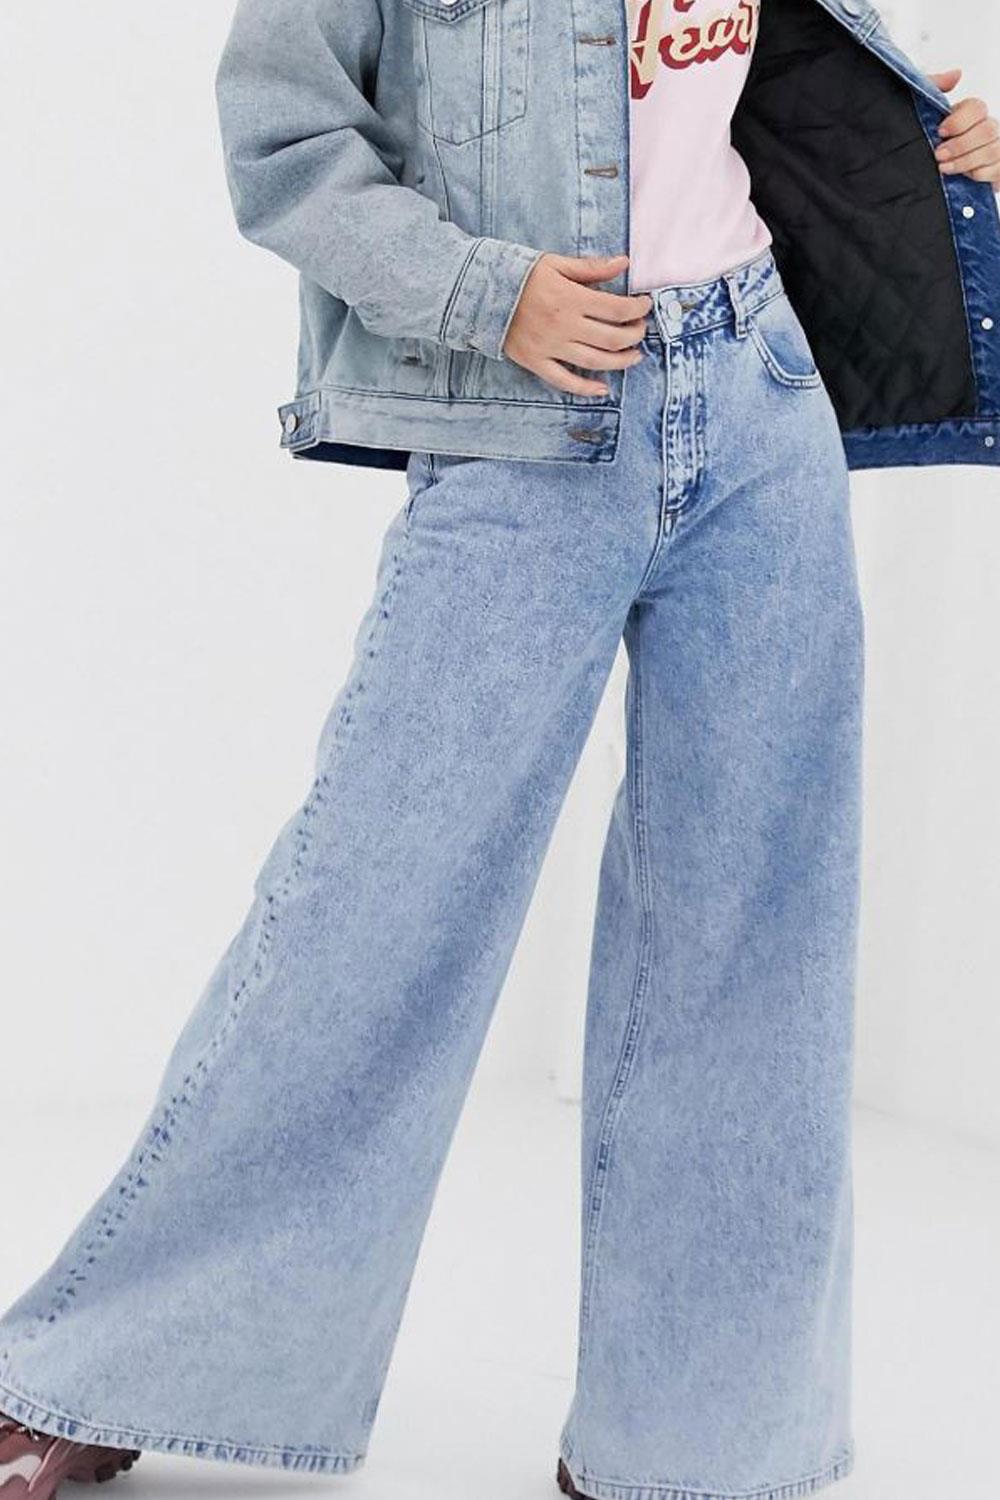 jeans low cost pantalones vaqueros Reclaimed Vintage, 23,99€